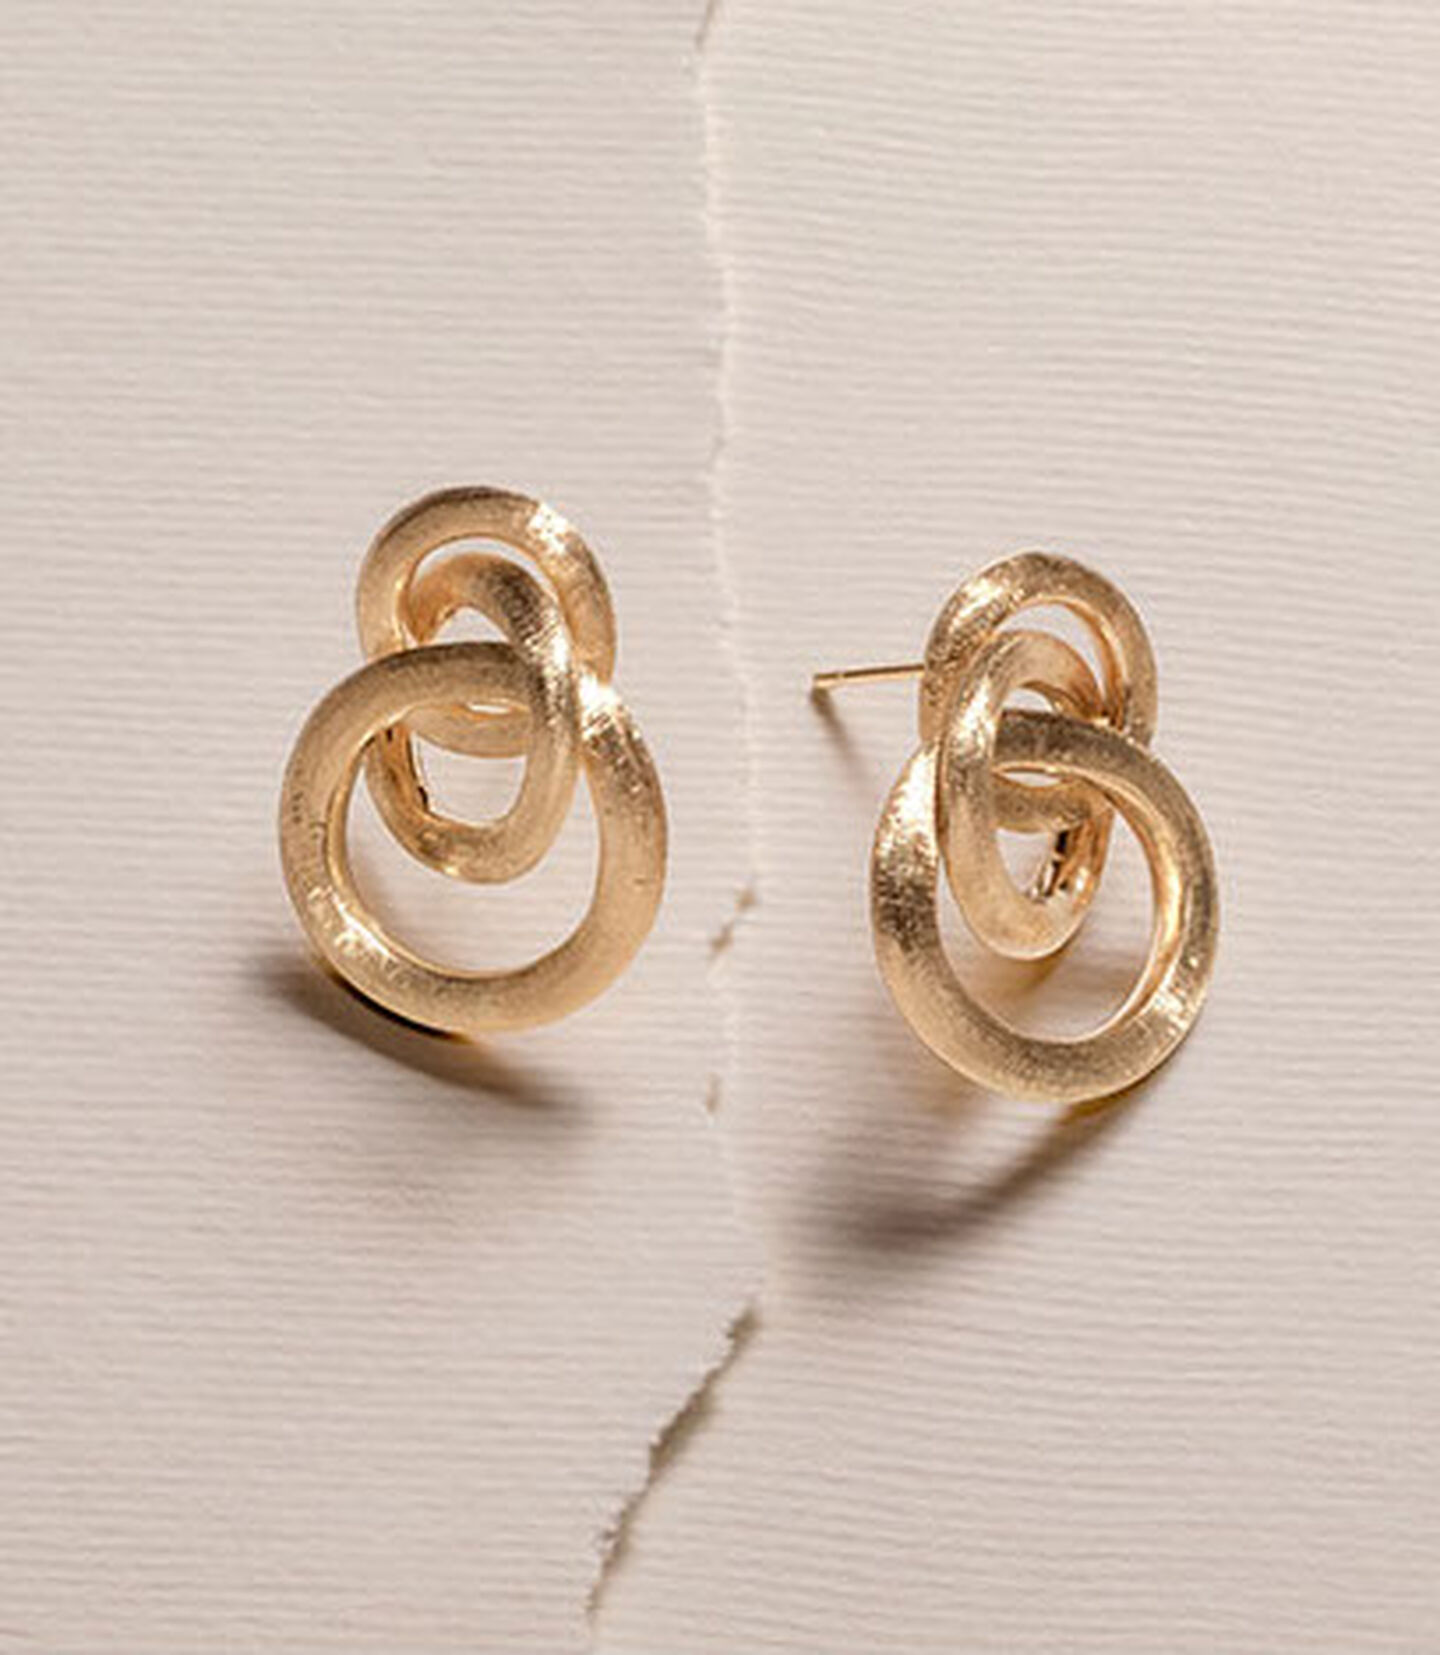 Gold Marco Bicego Jaipur Earrings